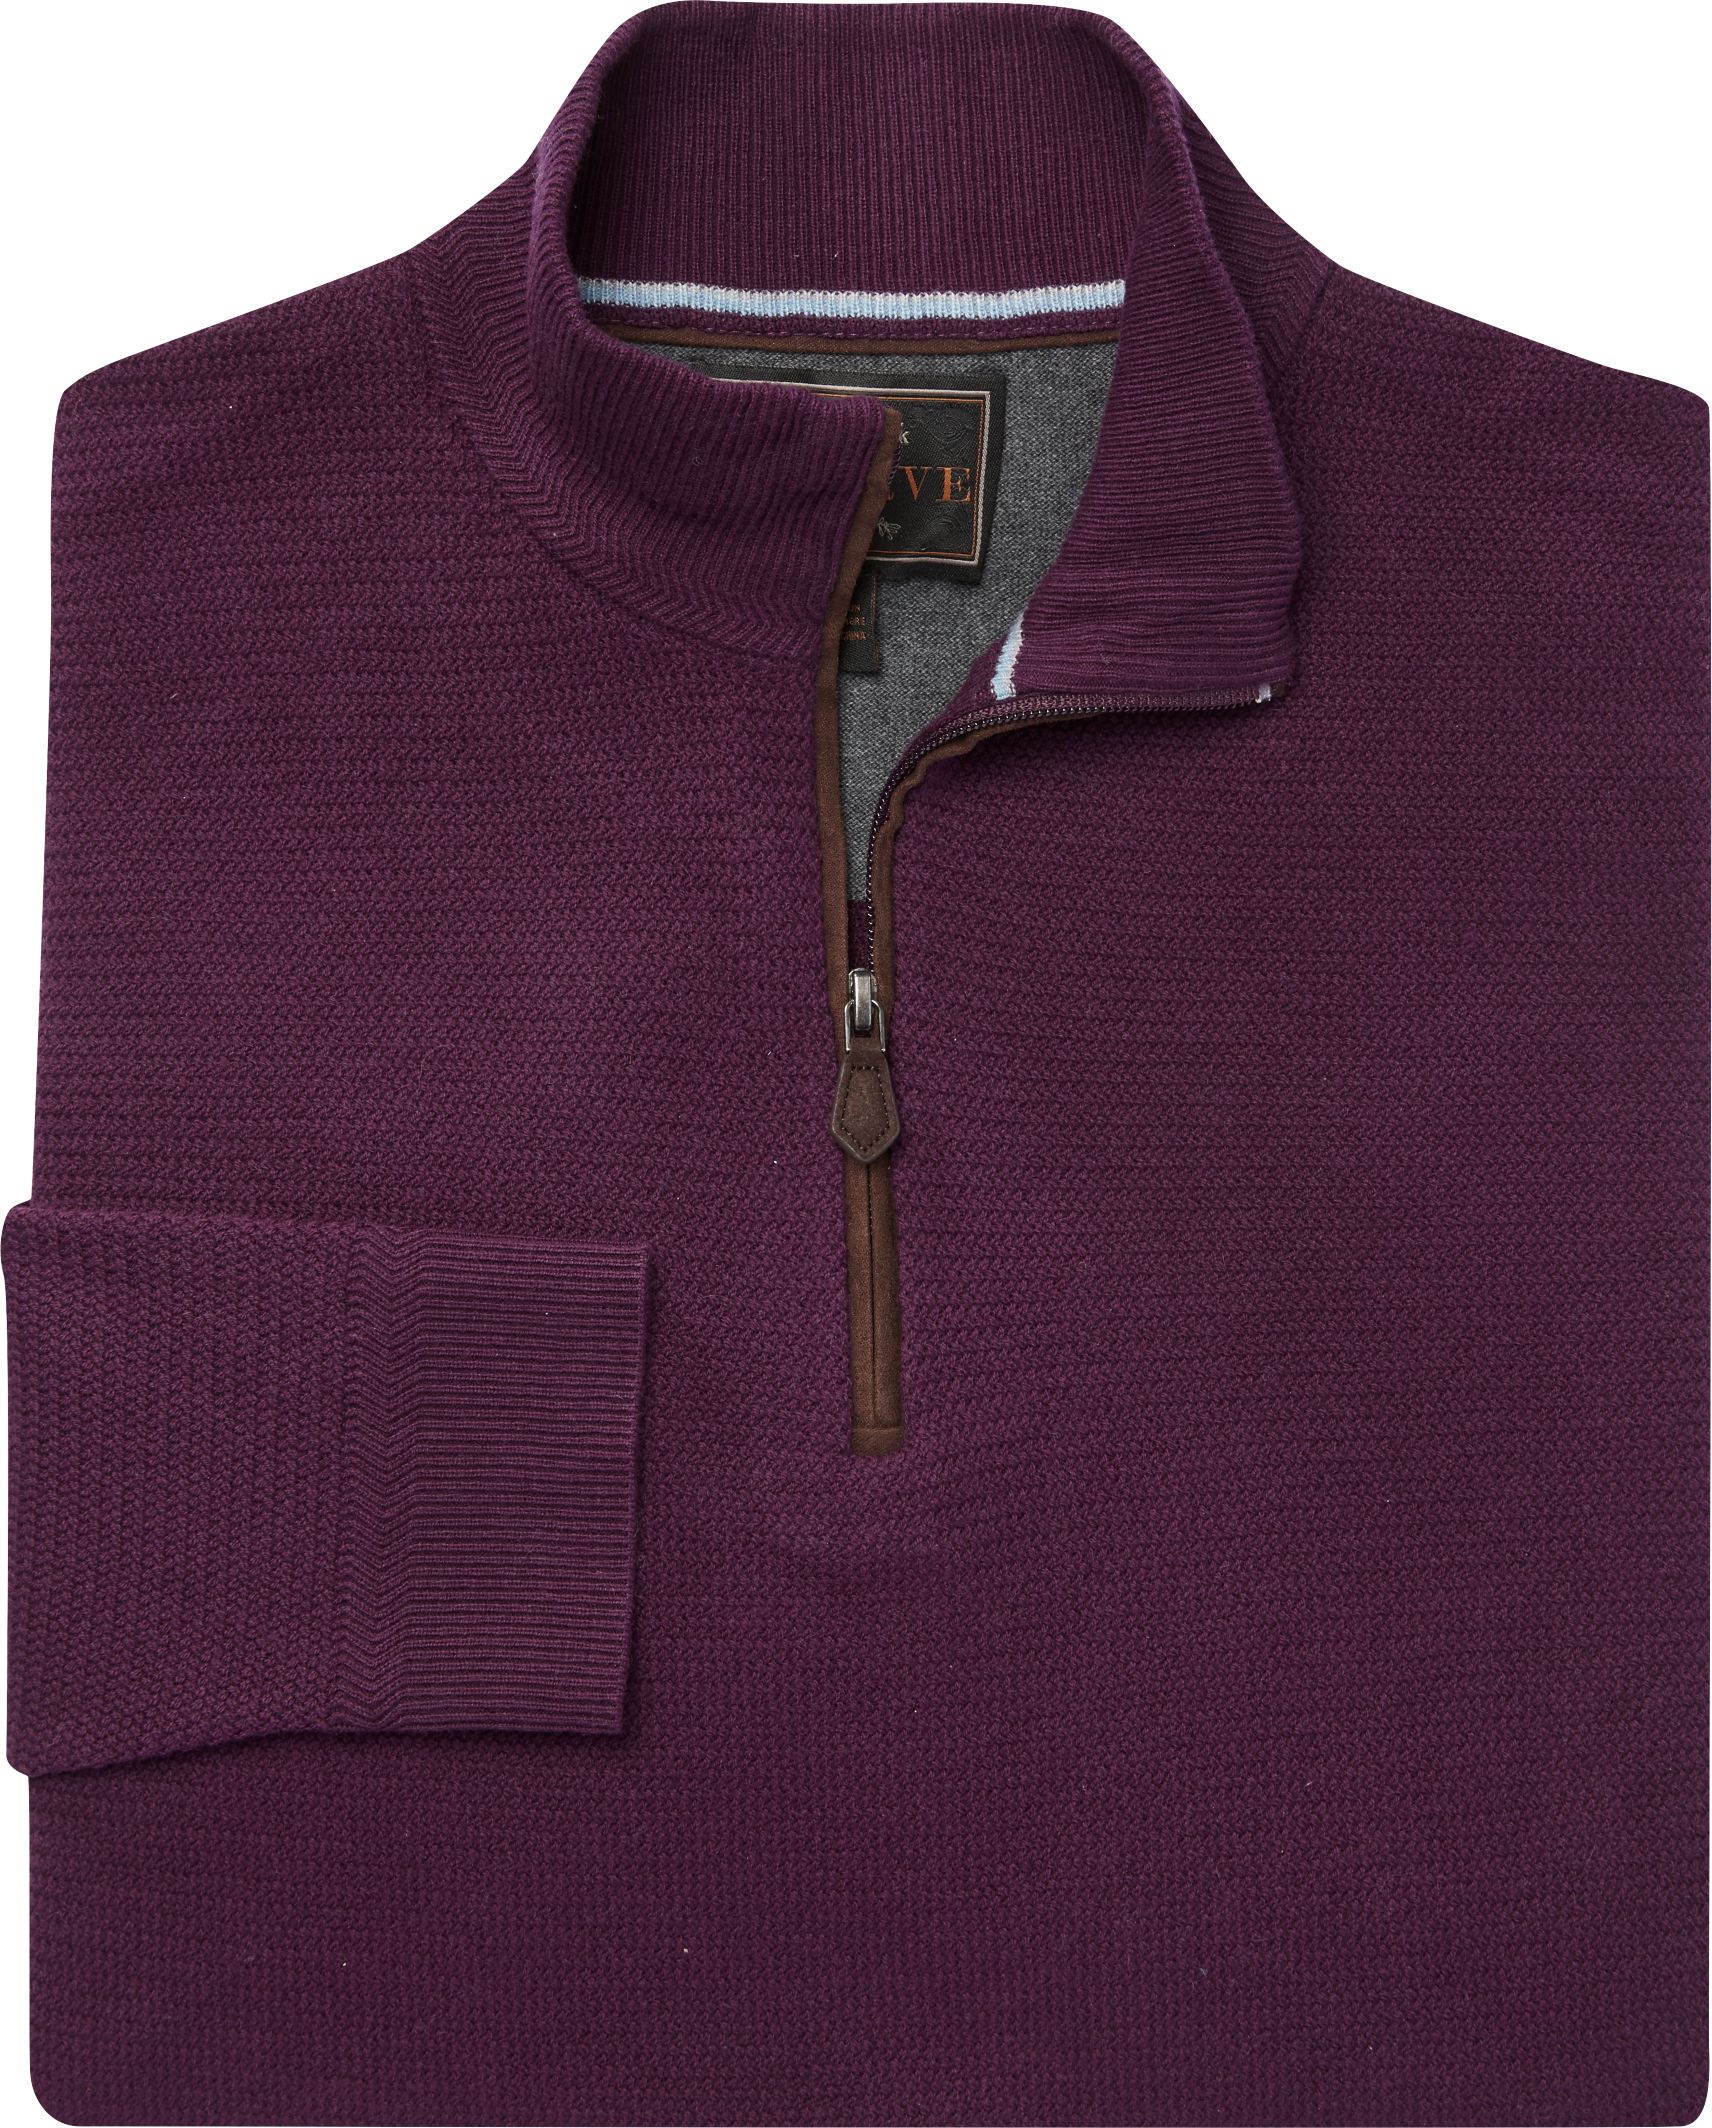 Reserve Collection Cotton Cashmere Quarter-Zip Sweater - Reserve ...